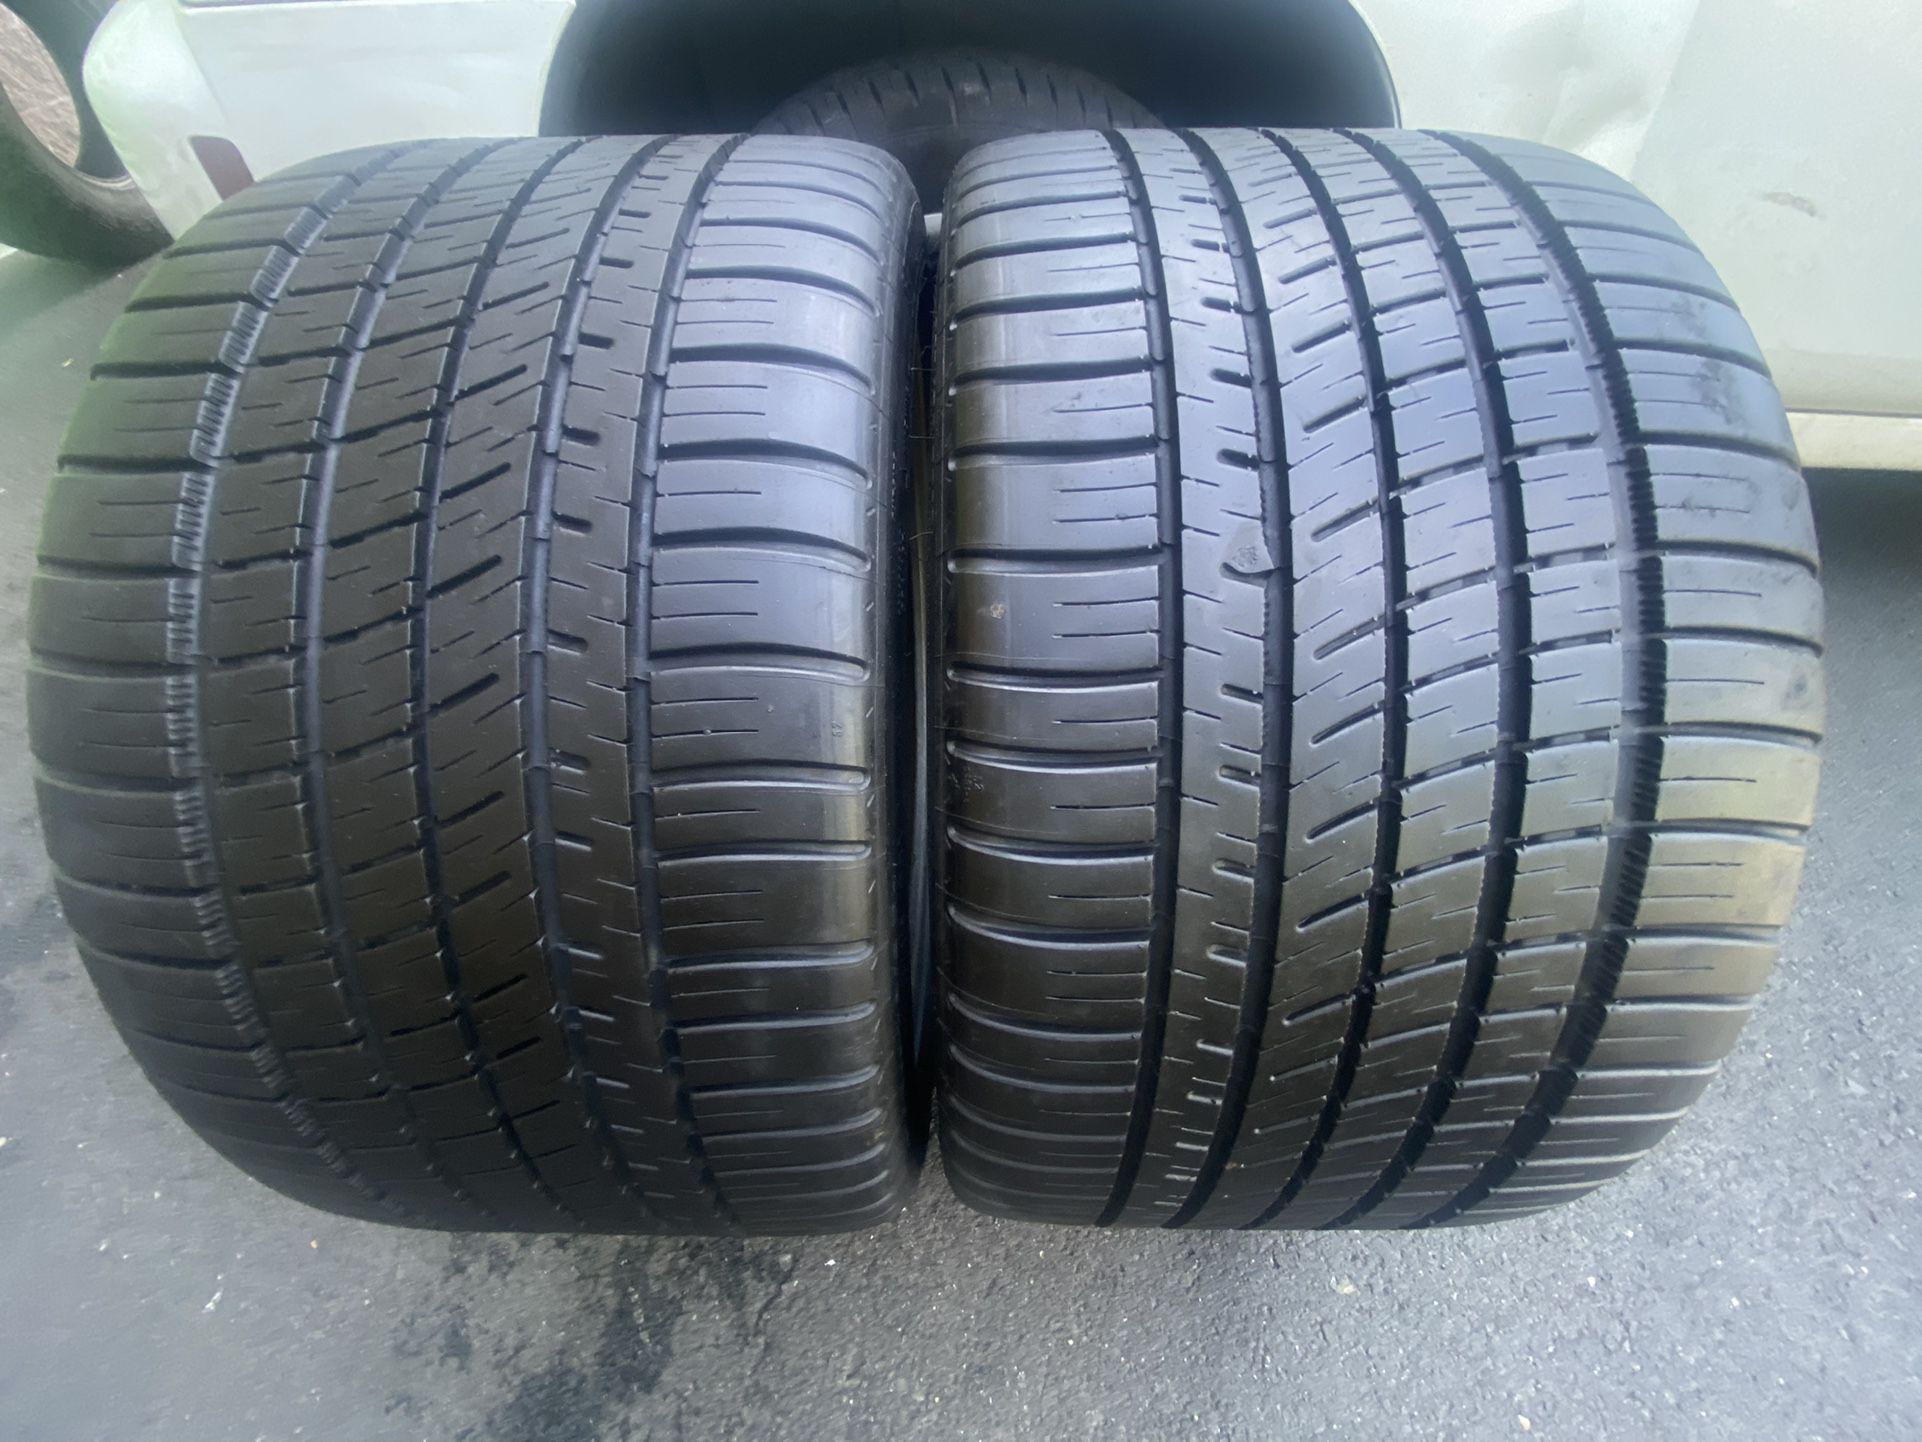 285/30/19 Michelin Pilot Sport 2 tires 